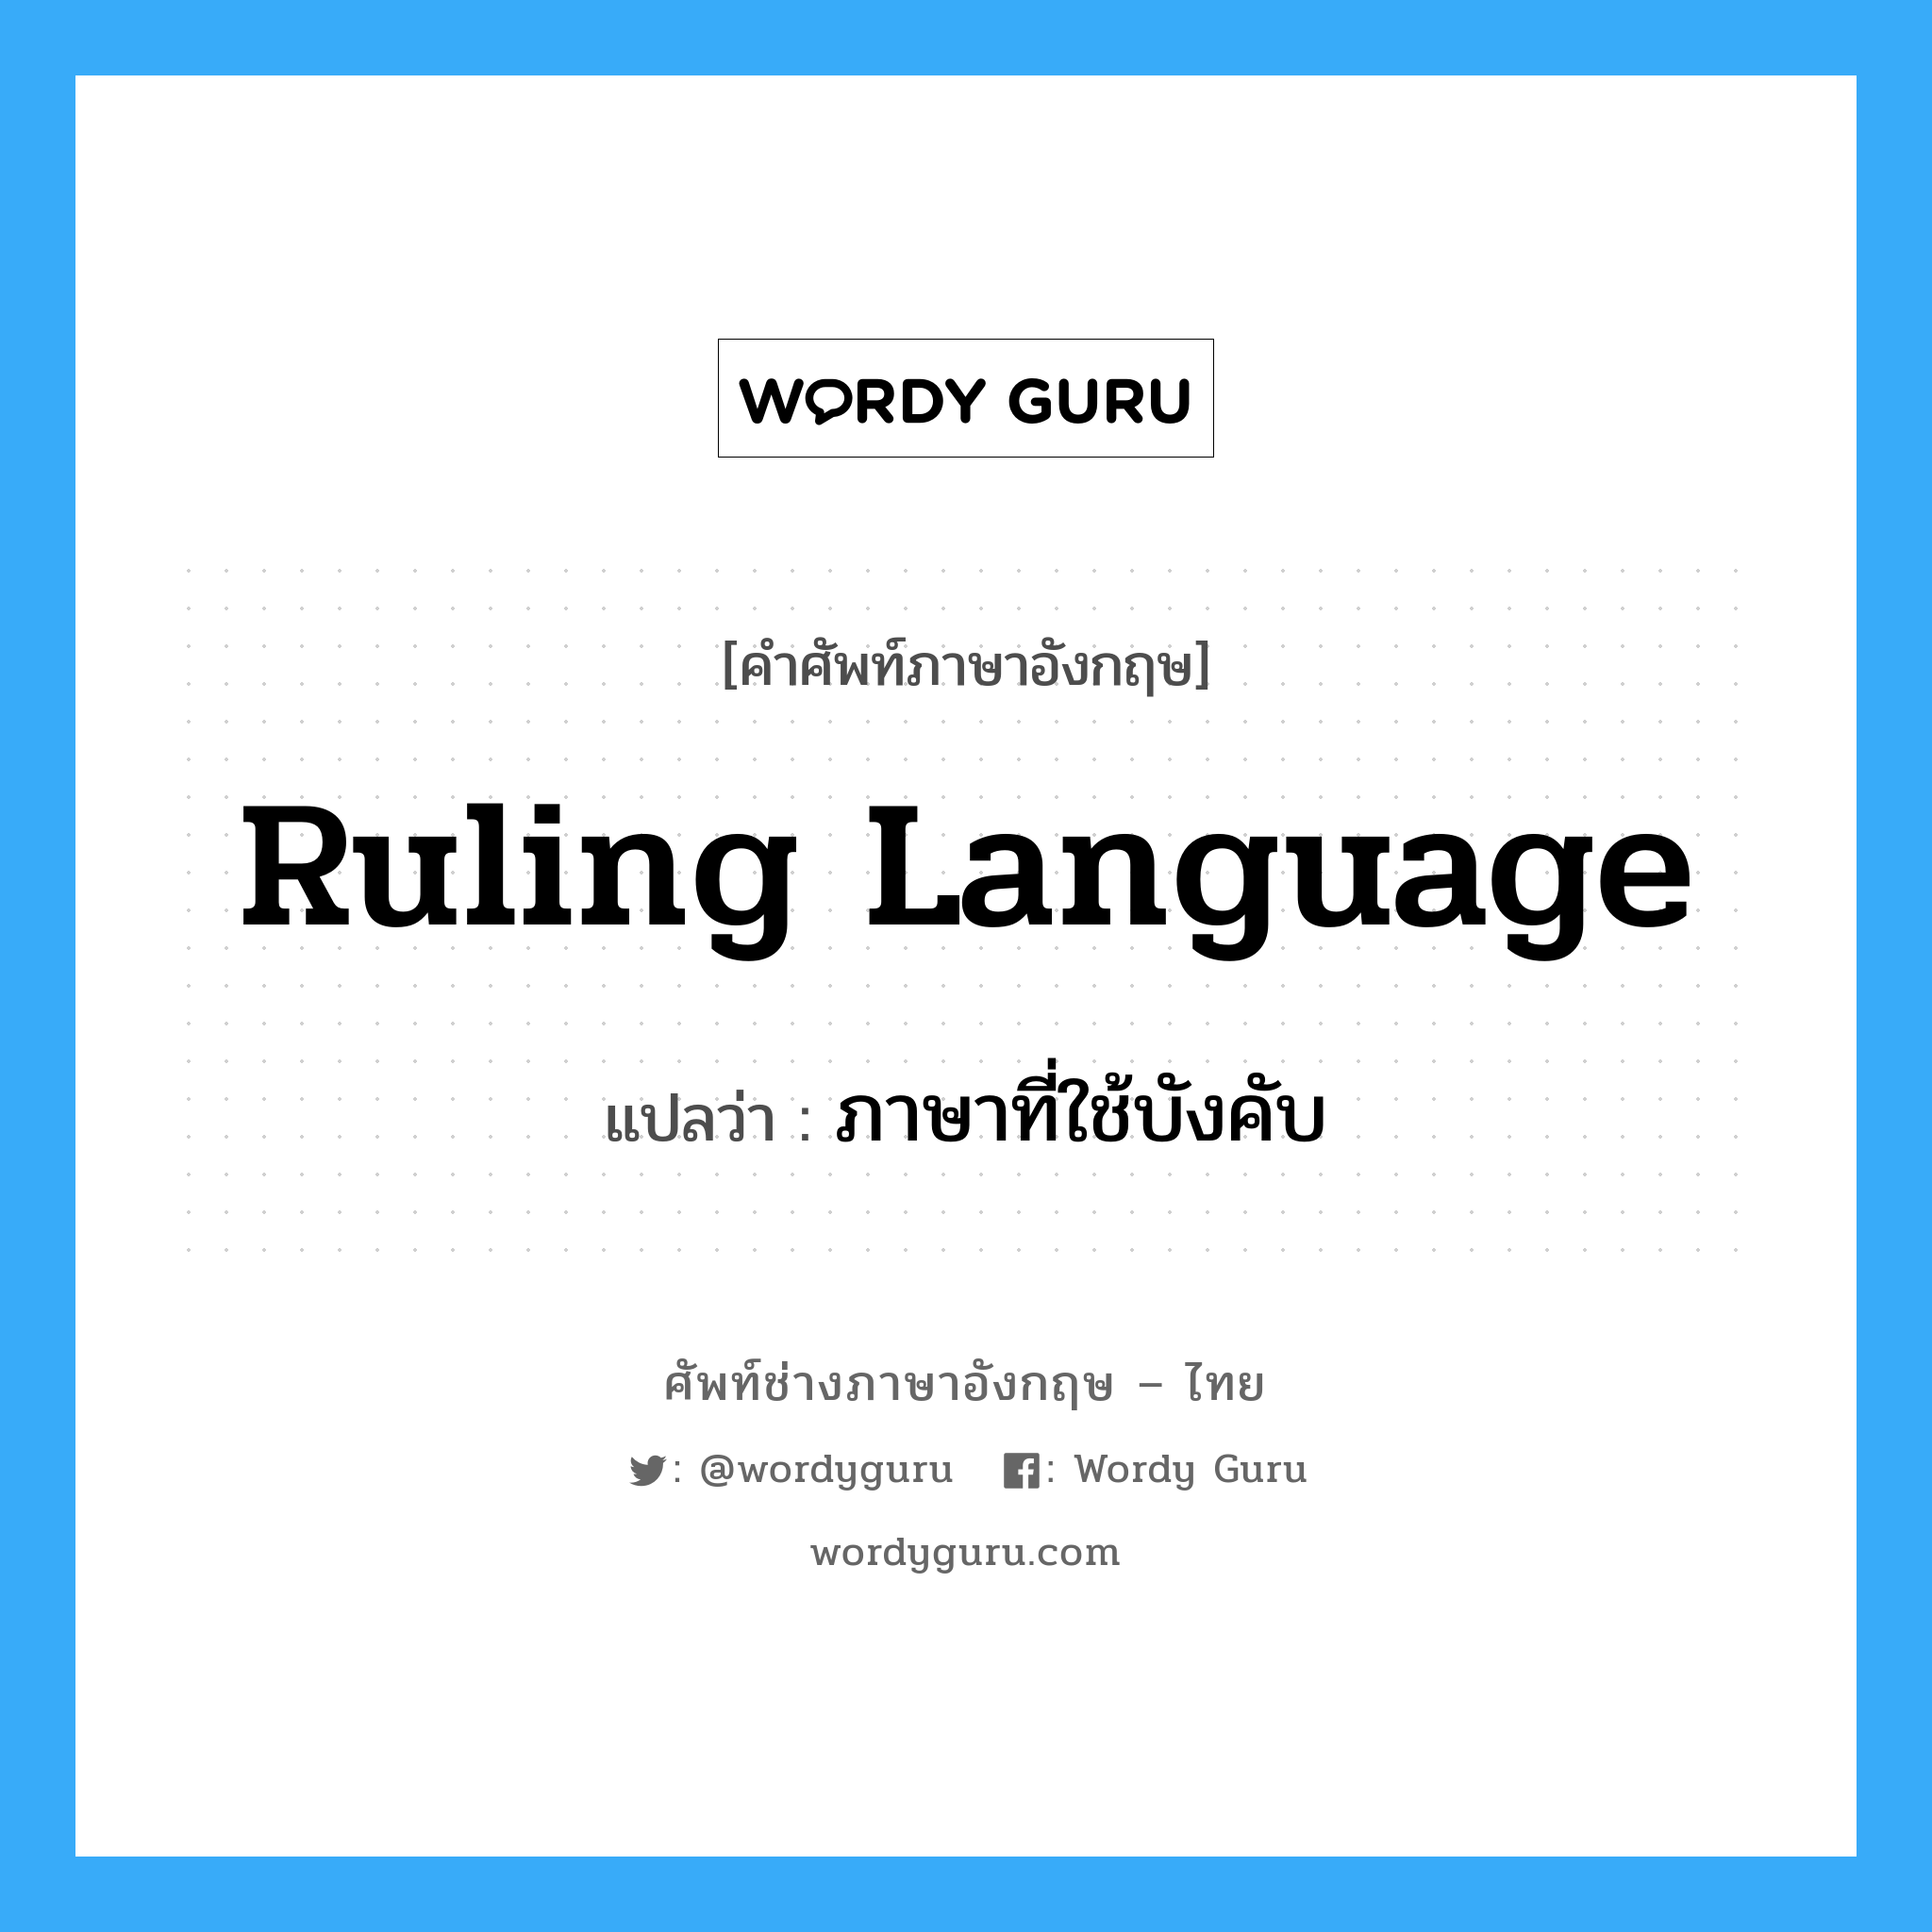 Ruling Language แปลว่า?, คำศัพท์ช่างภาษาอังกฤษ - ไทย Ruling Language คำศัพท์ภาษาอังกฤษ Ruling Language แปลว่า ภาษาที่ใช้บังคับ